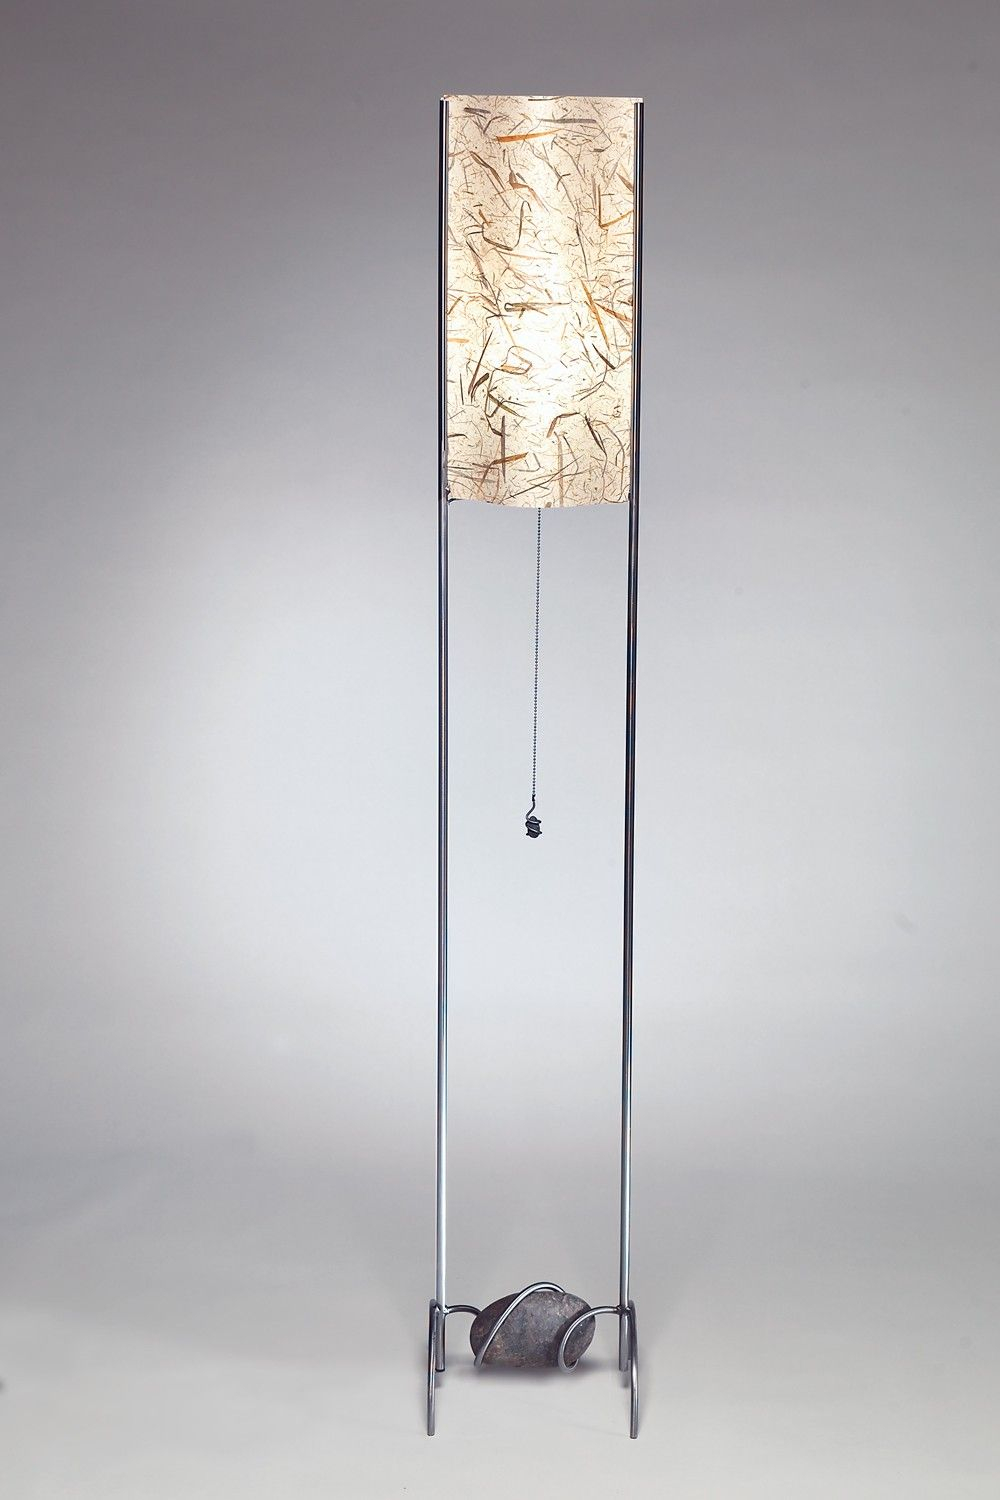 Extra Tall Floor Lamps Tall Floor Lamps Tall Lamps Floor inside dimensions 1000 X 1500